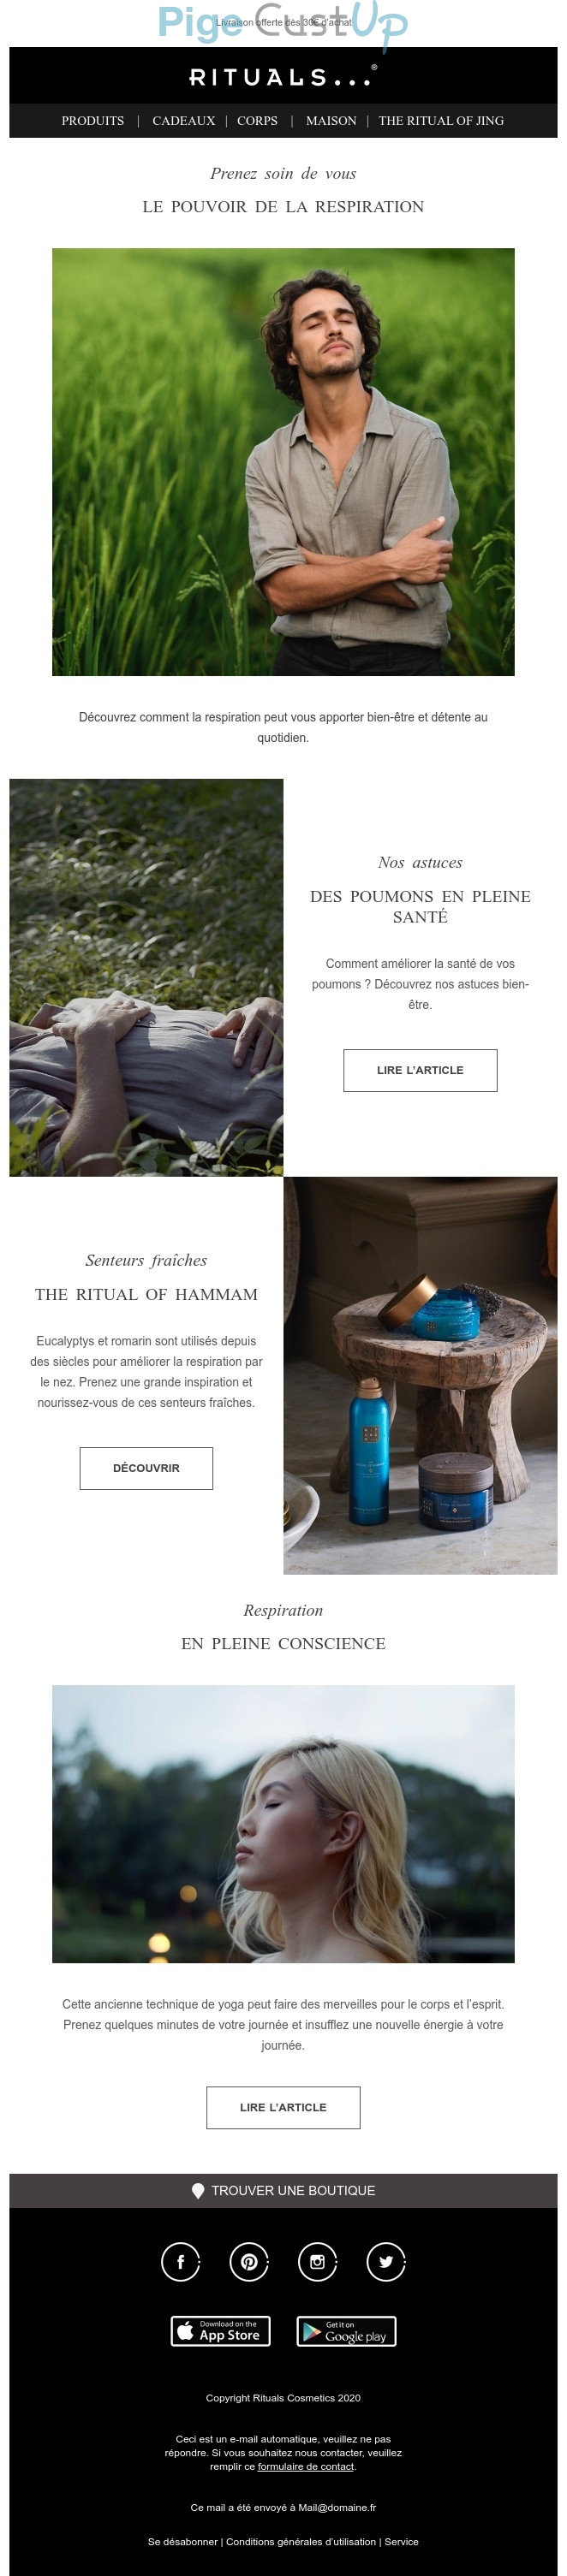 Exemple de Type de media  e-mailing - Rituals Cosmetics - Marketing relationnel - Newsletter